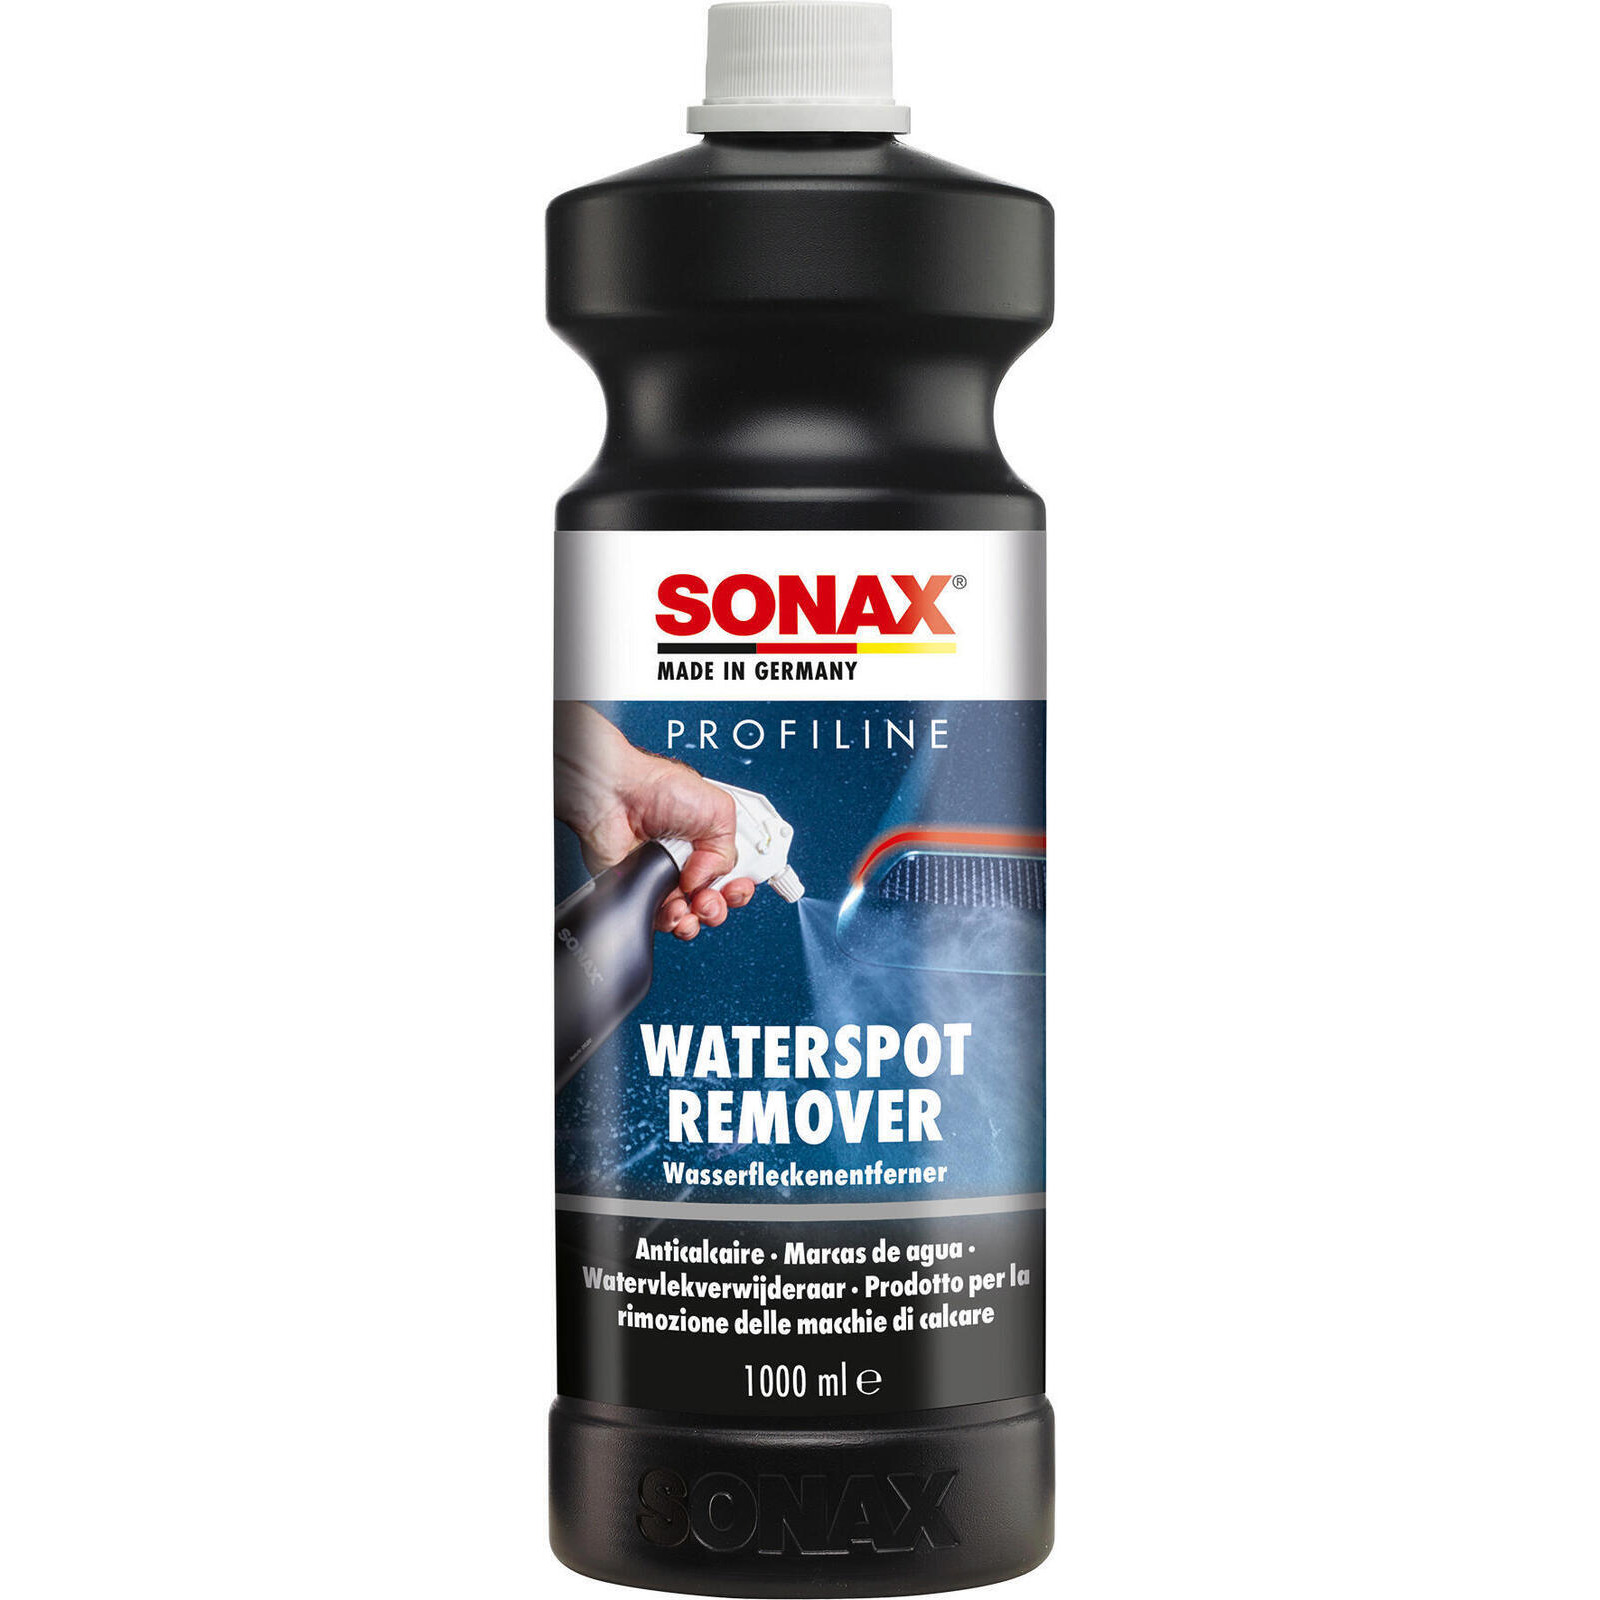 SONAX Lackreiniger PROFILINE Waterspot Remover